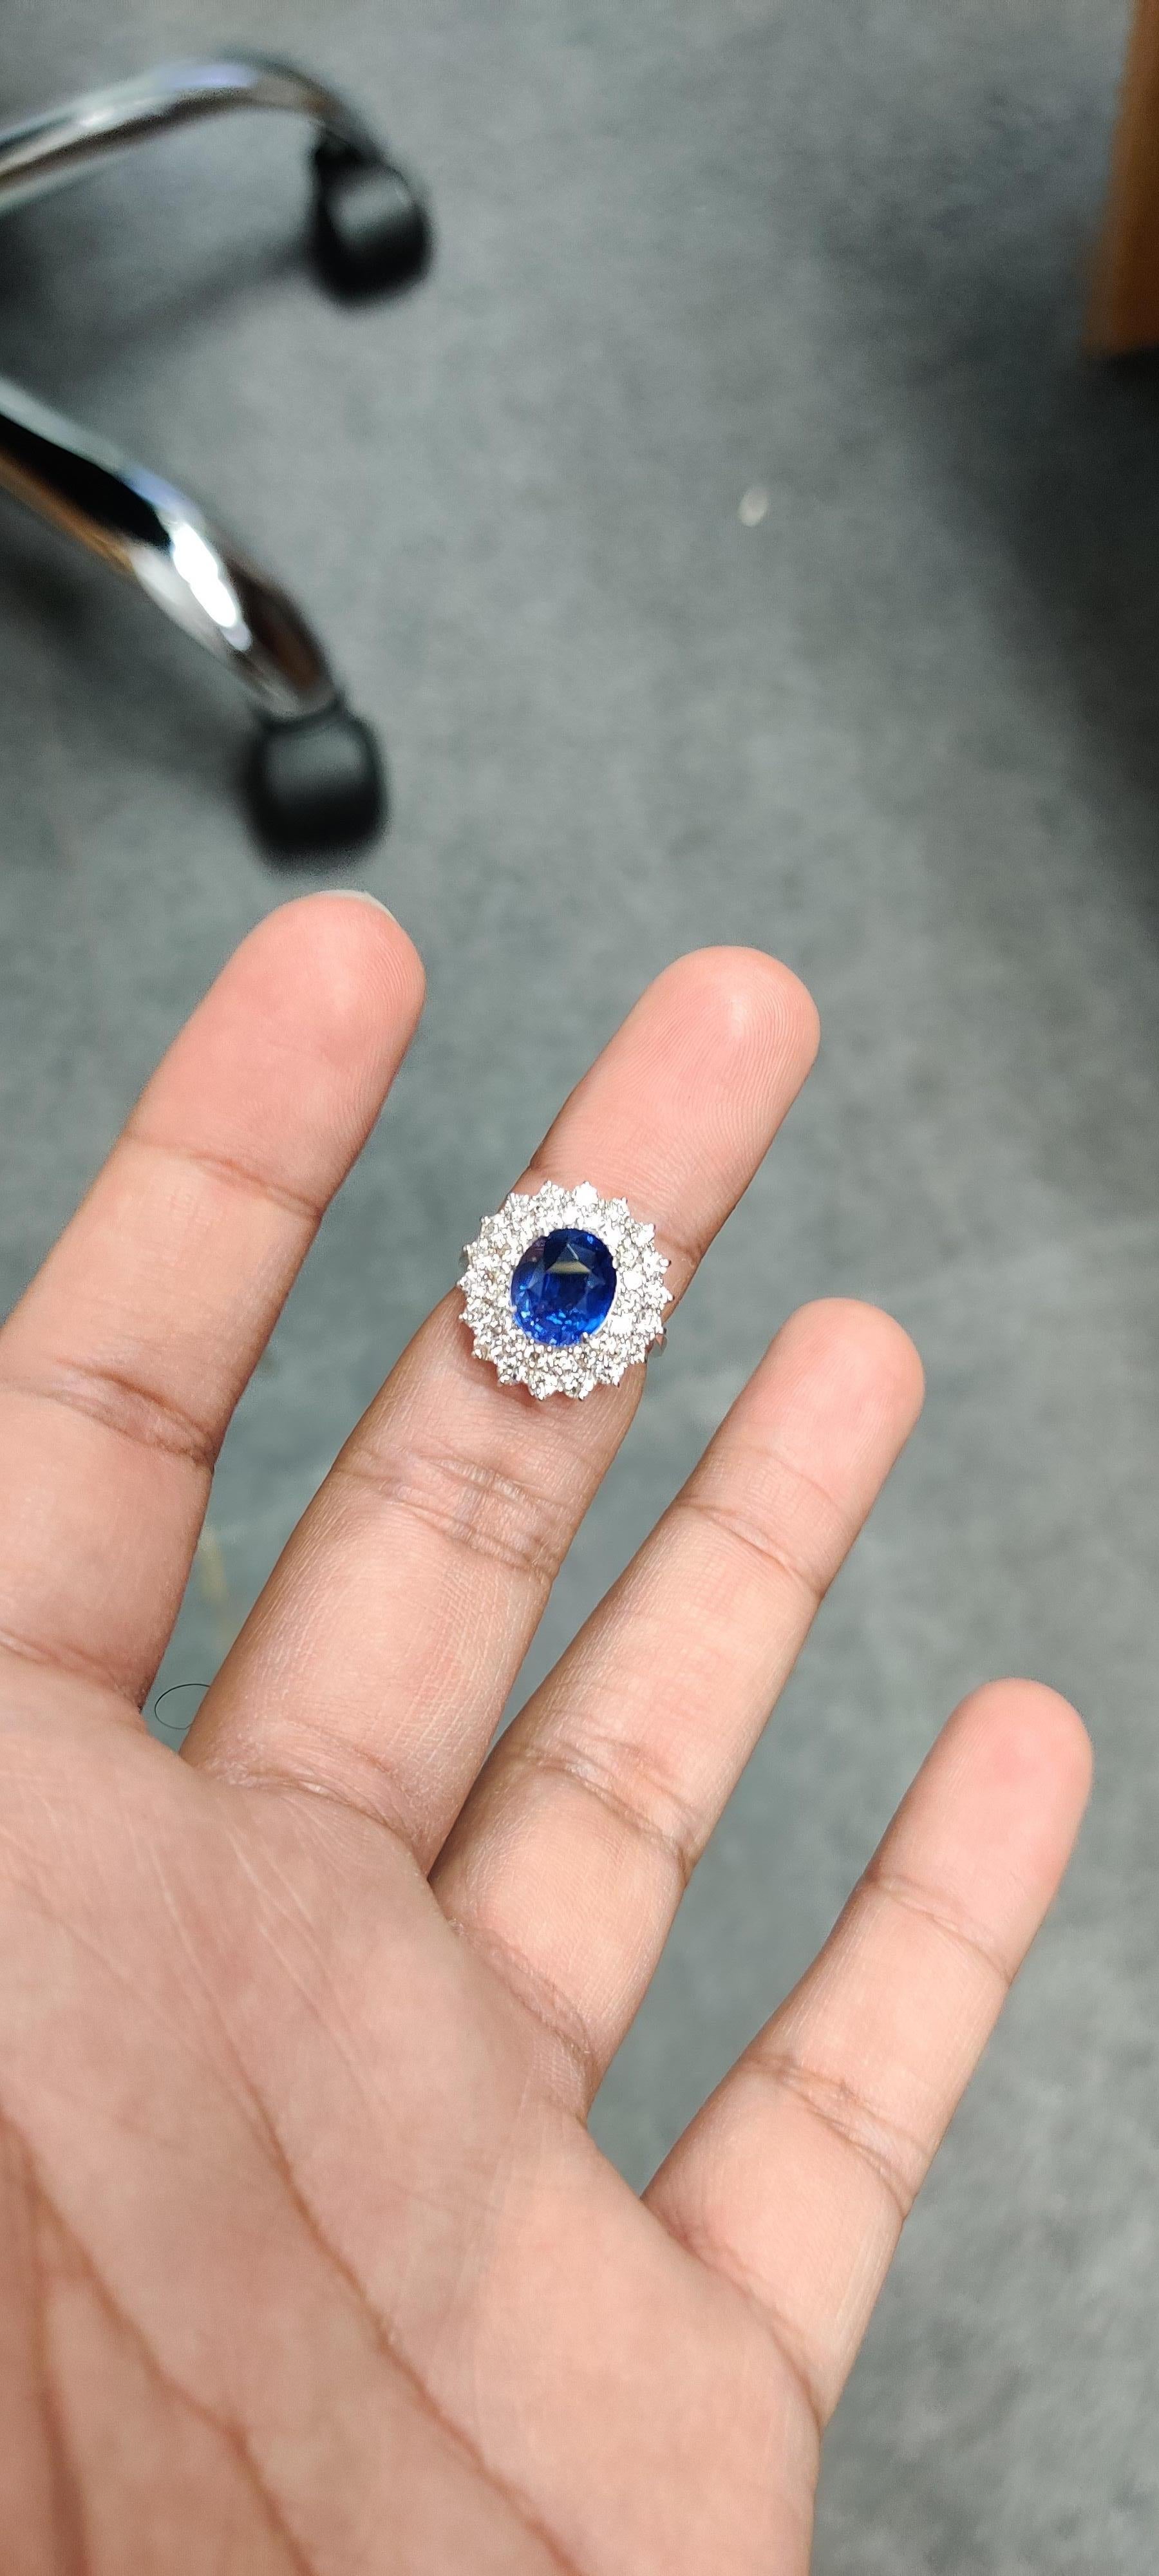 3.74 Carat Sri Lanka Blue Sapphire Diamond Ring in 18K Gold For Sale 1